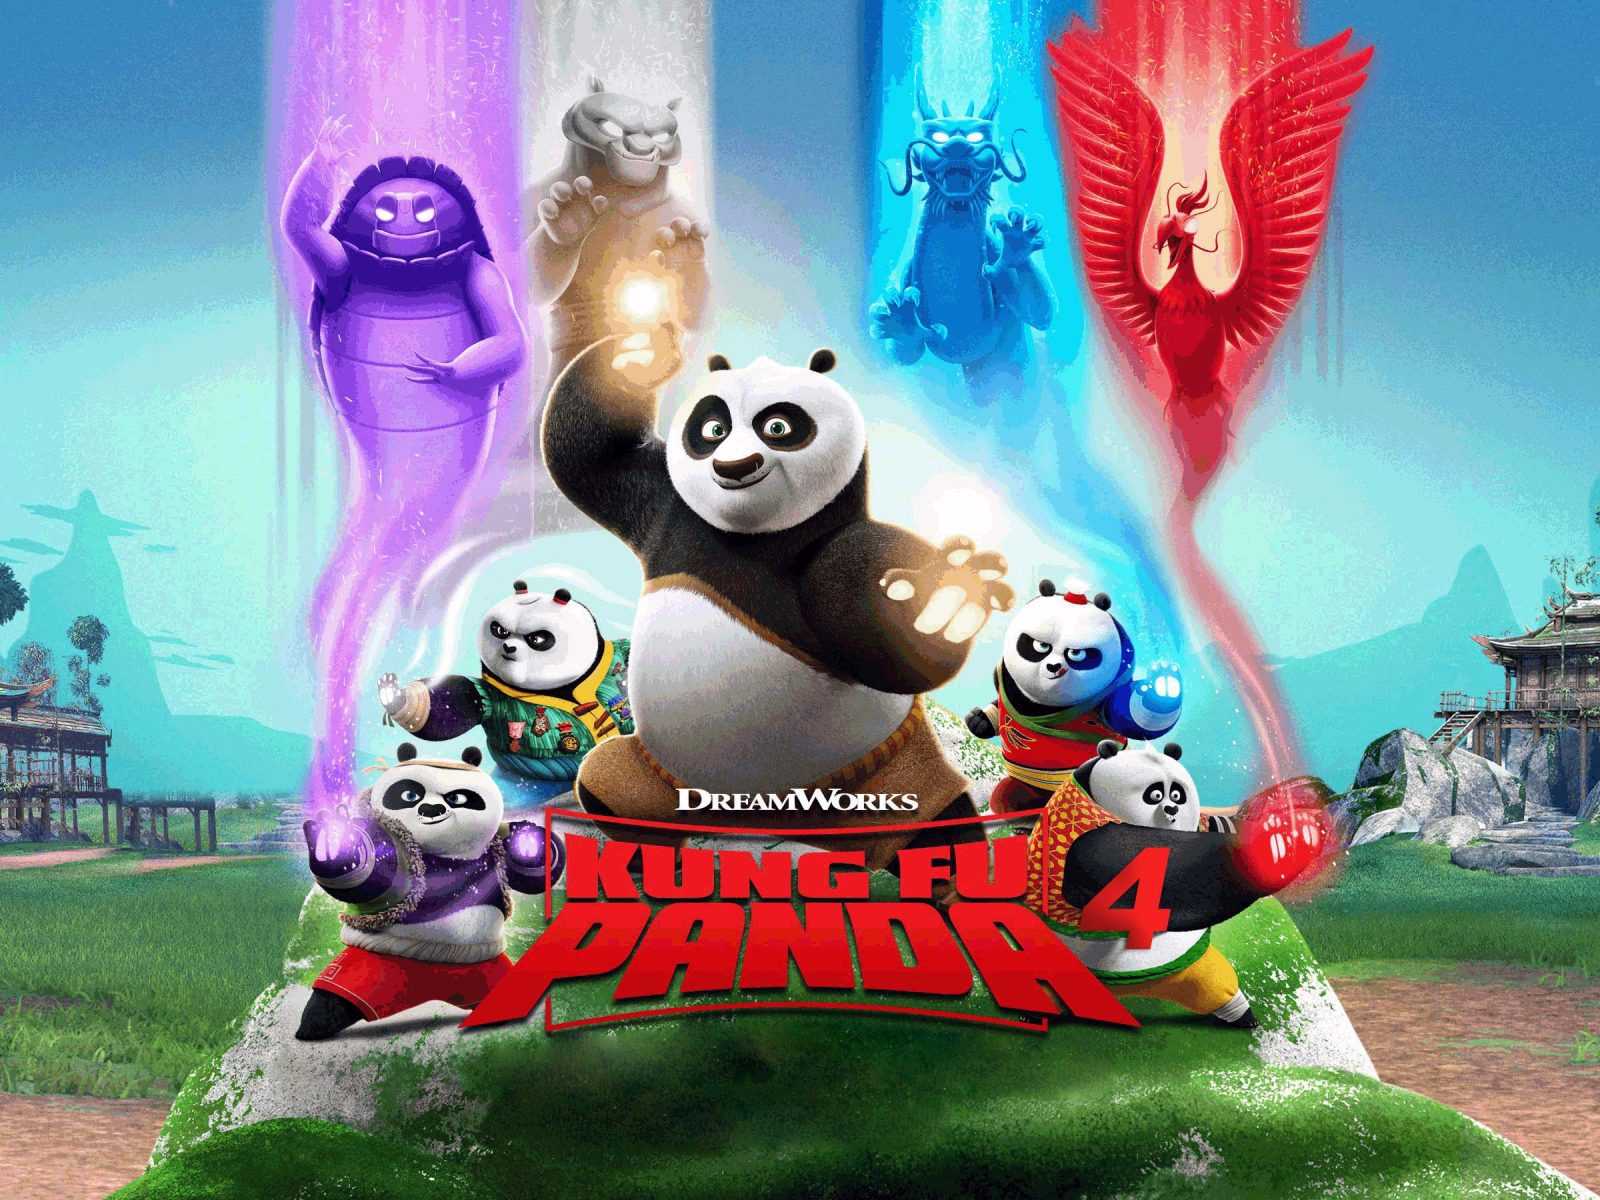  кунг-фу панда 4 — обзор фильмов 2019 года